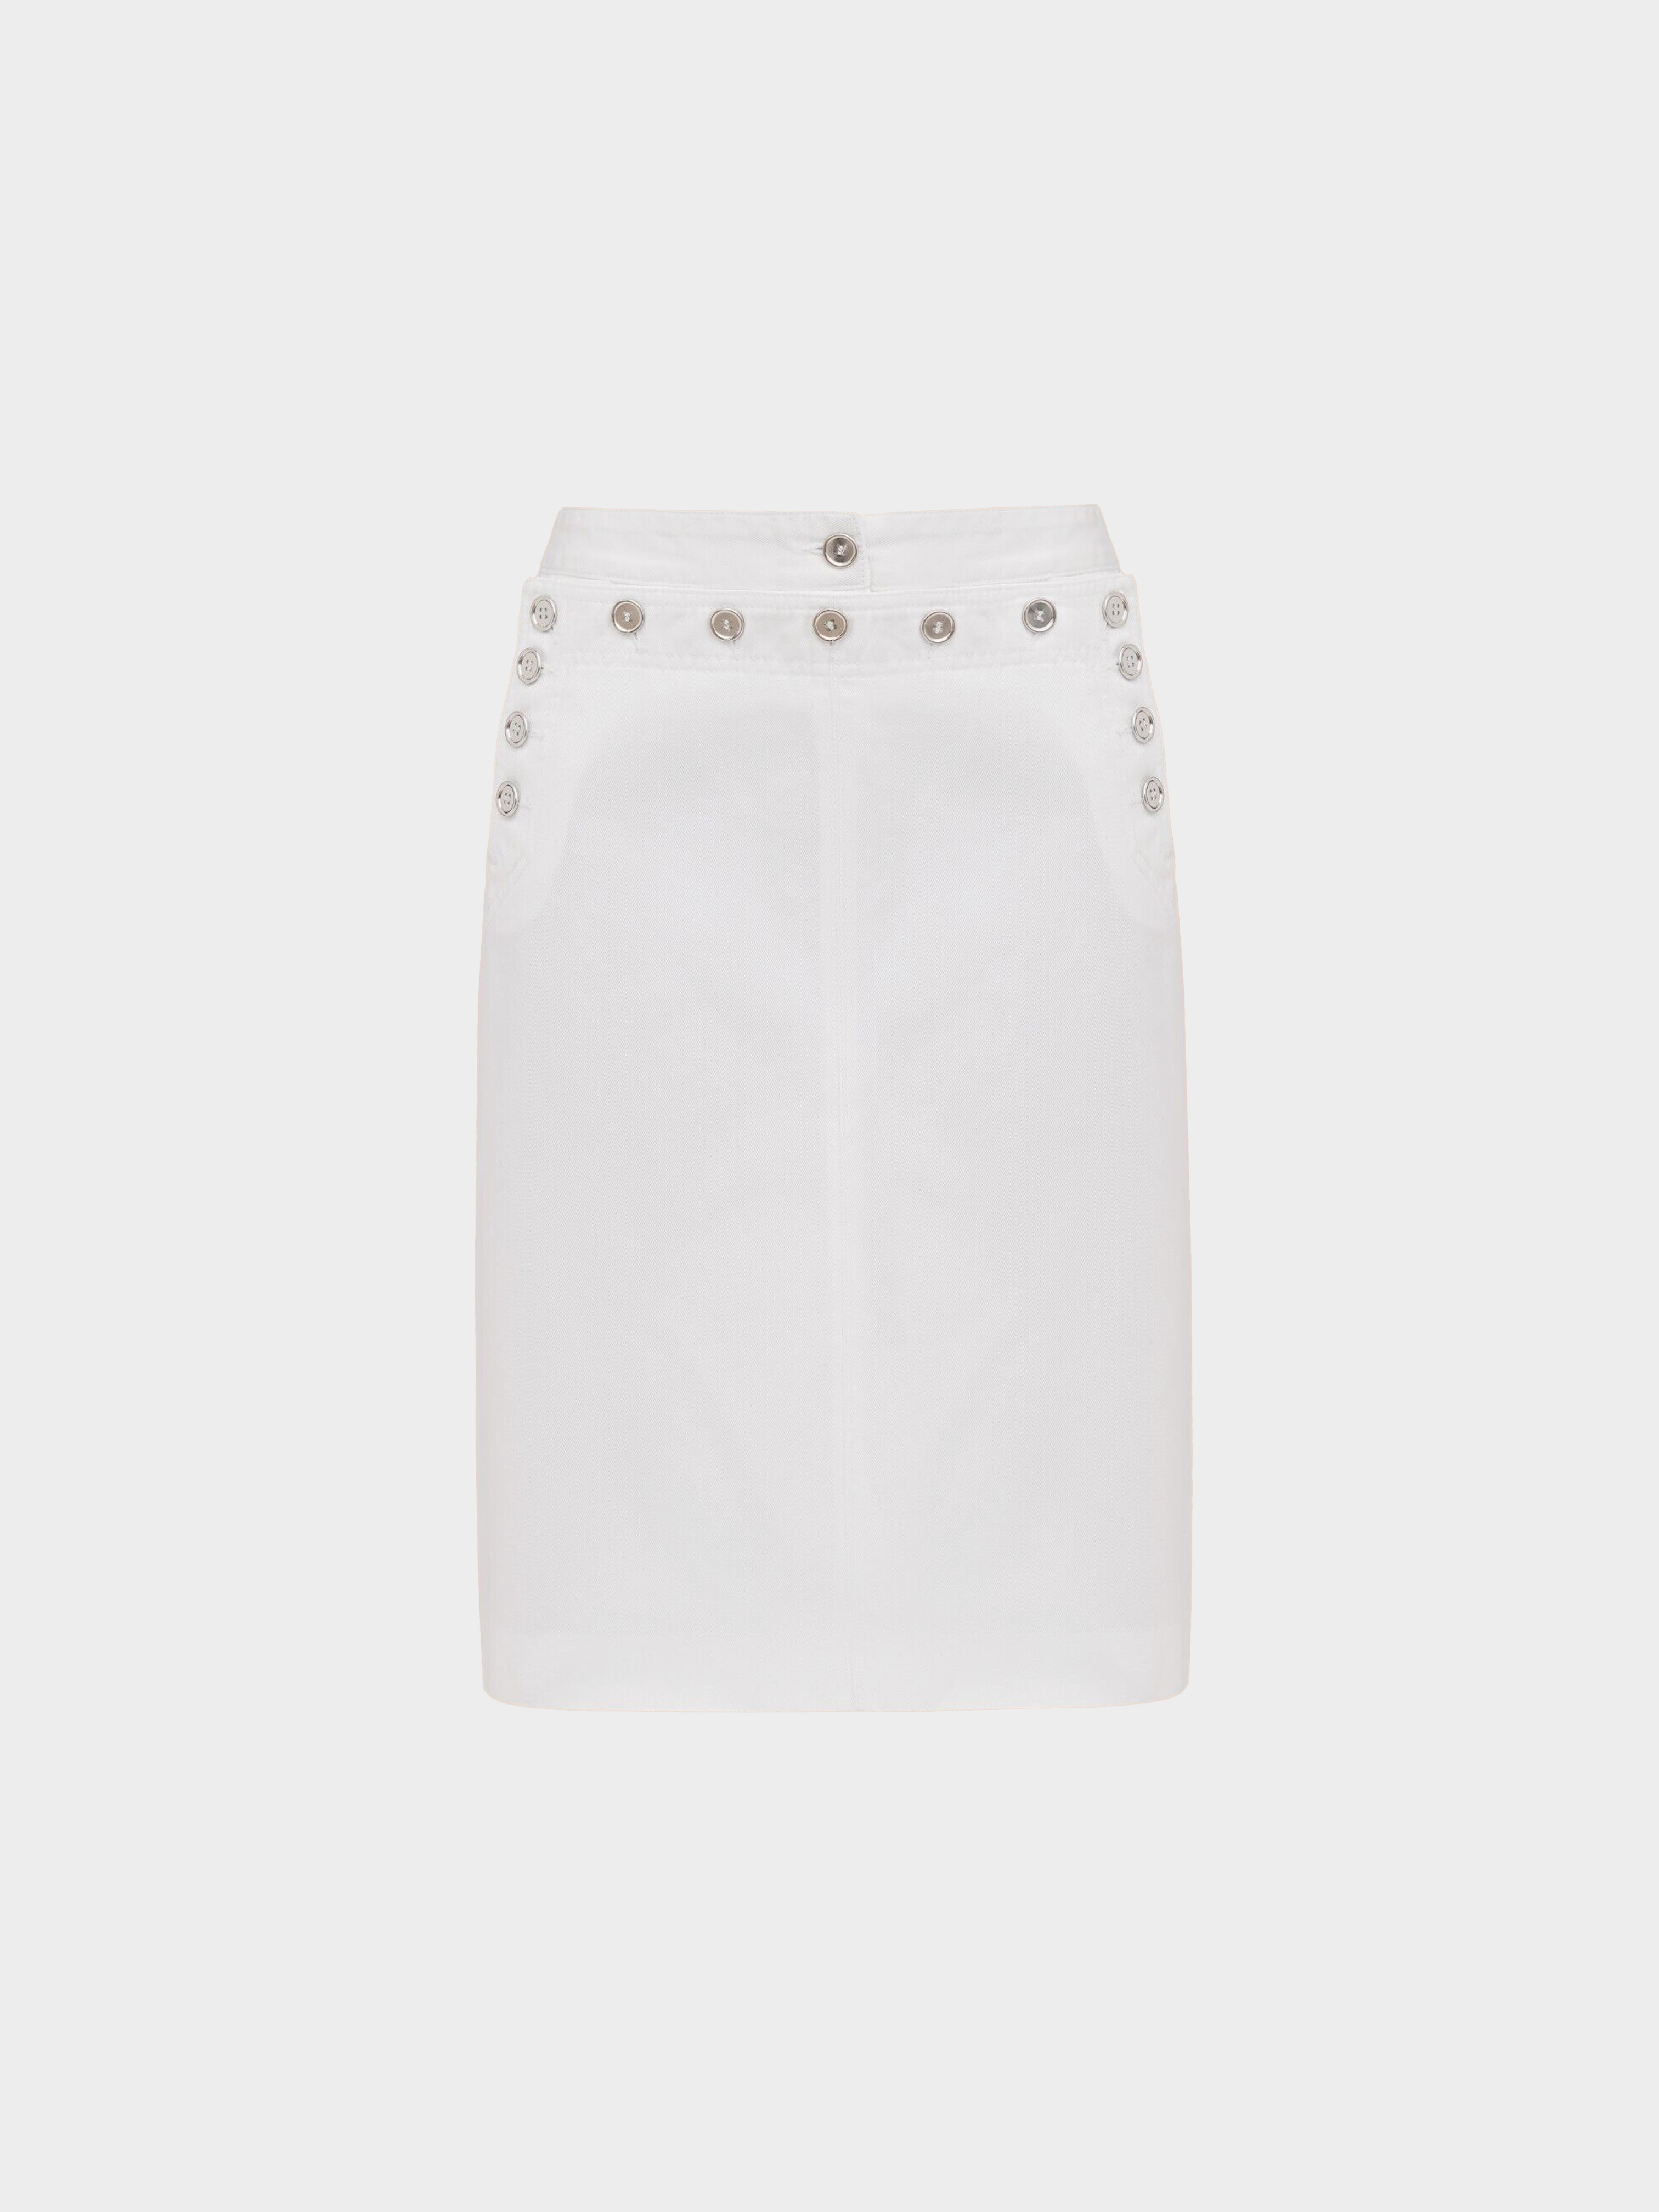 Dolce & Gabbana D&G 2000s White Midi Sailor Button Skirt